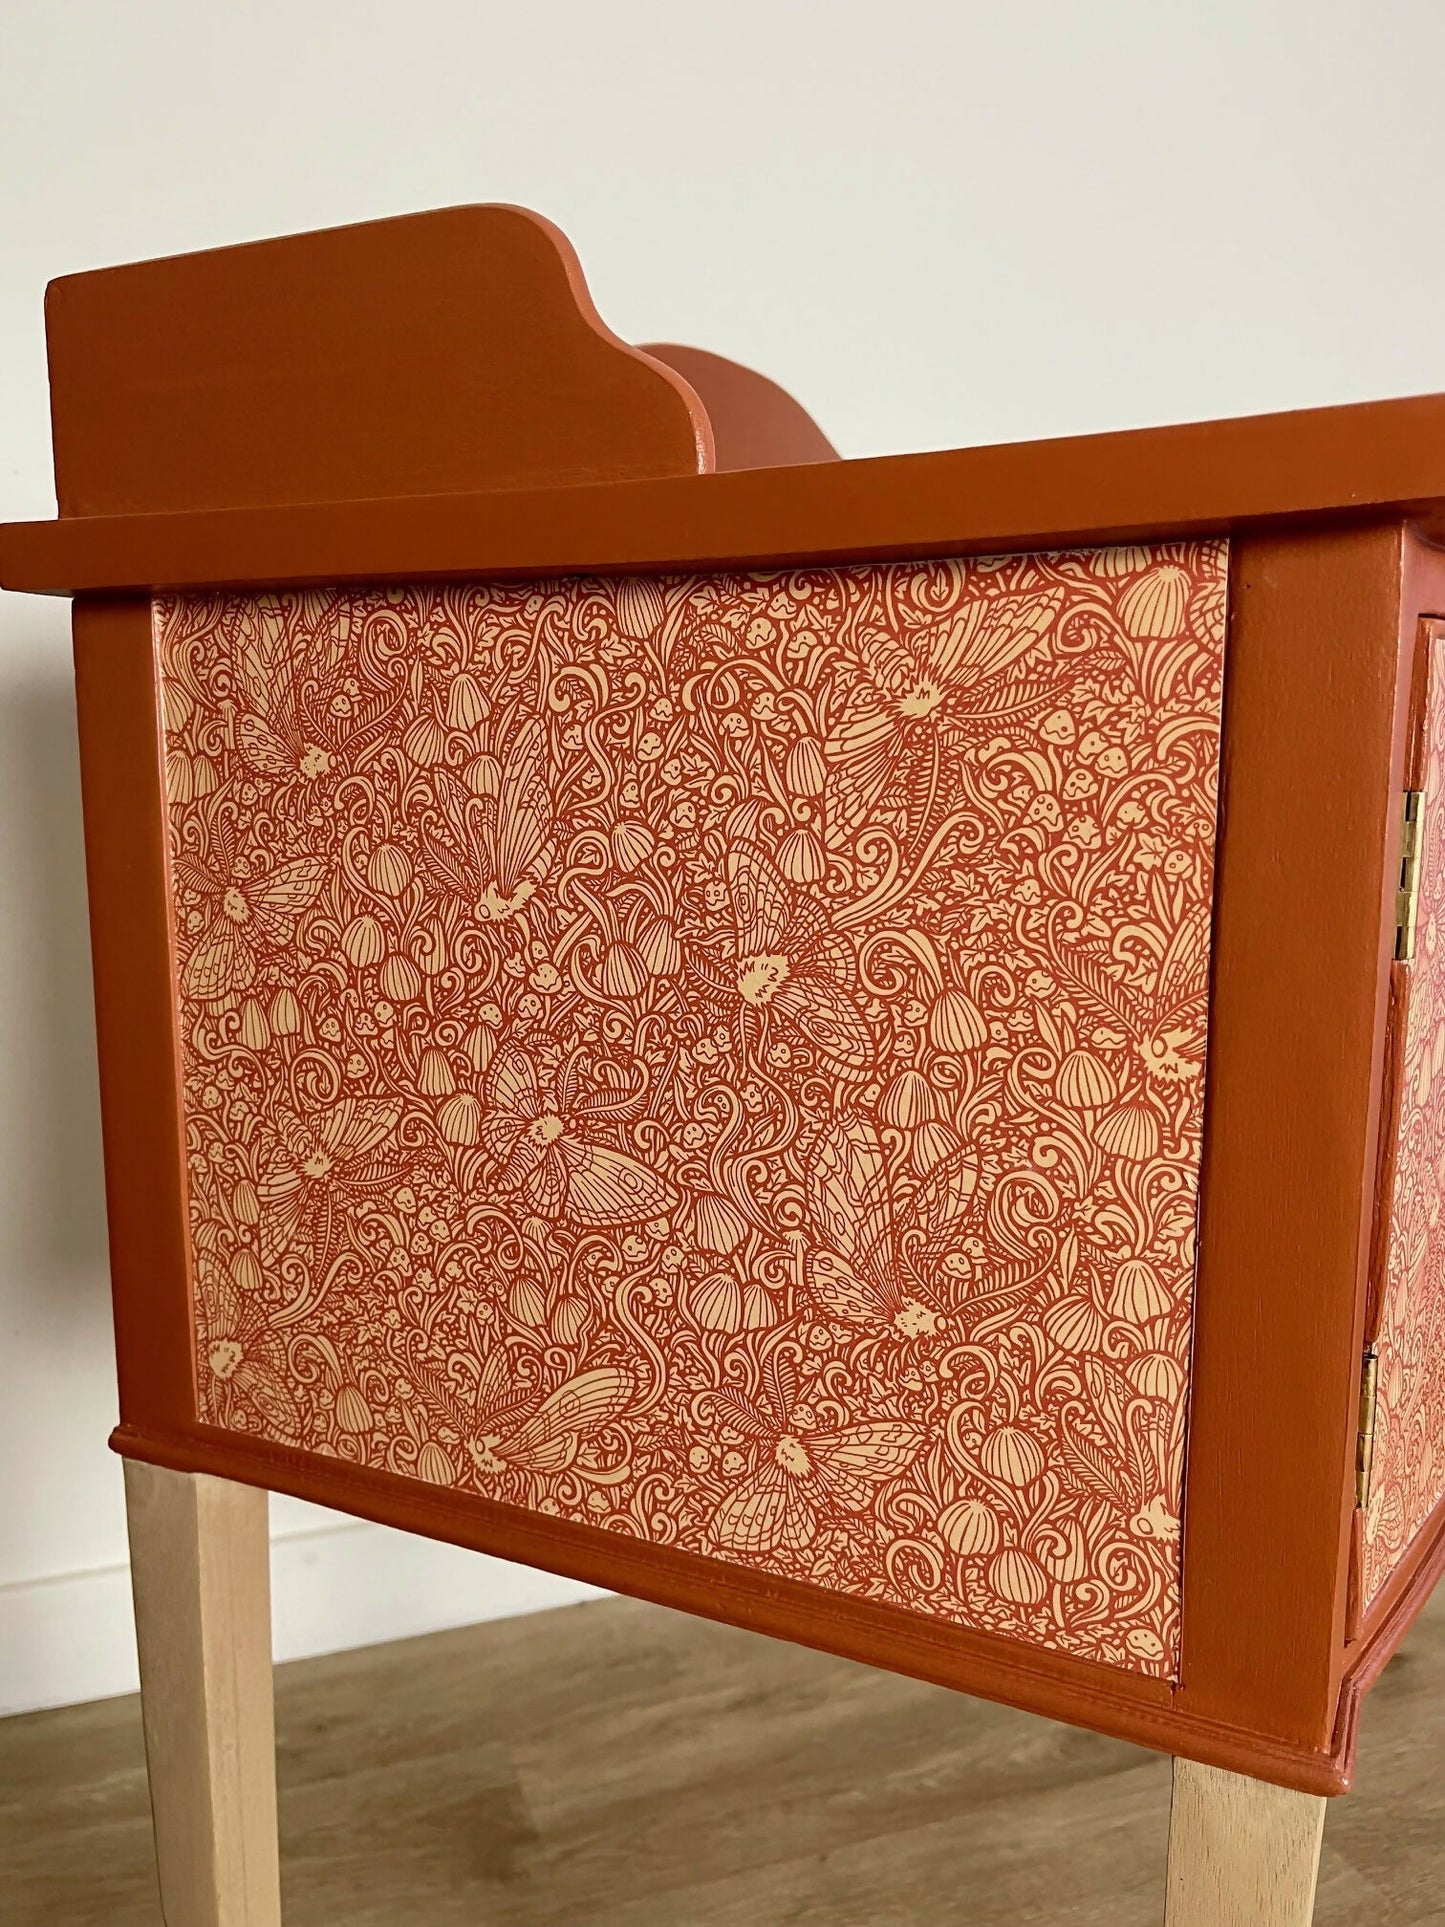 Unique vintage sideboard painted terracotta